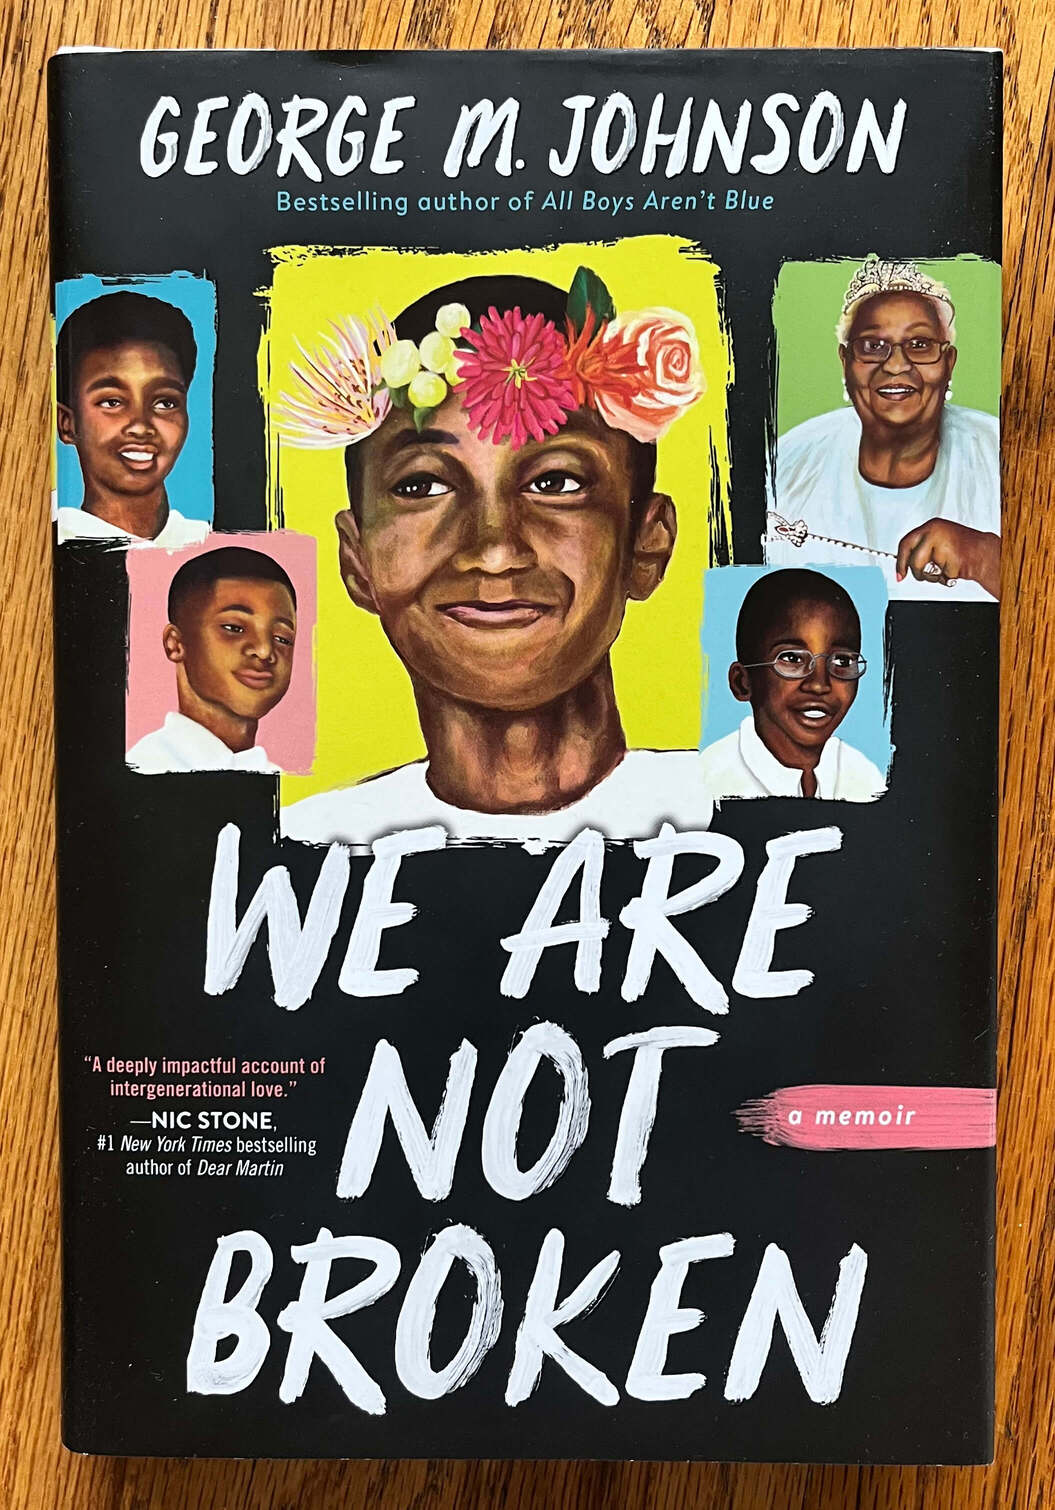 “We Are Not Broken: A Memoir” by George M. Johnson